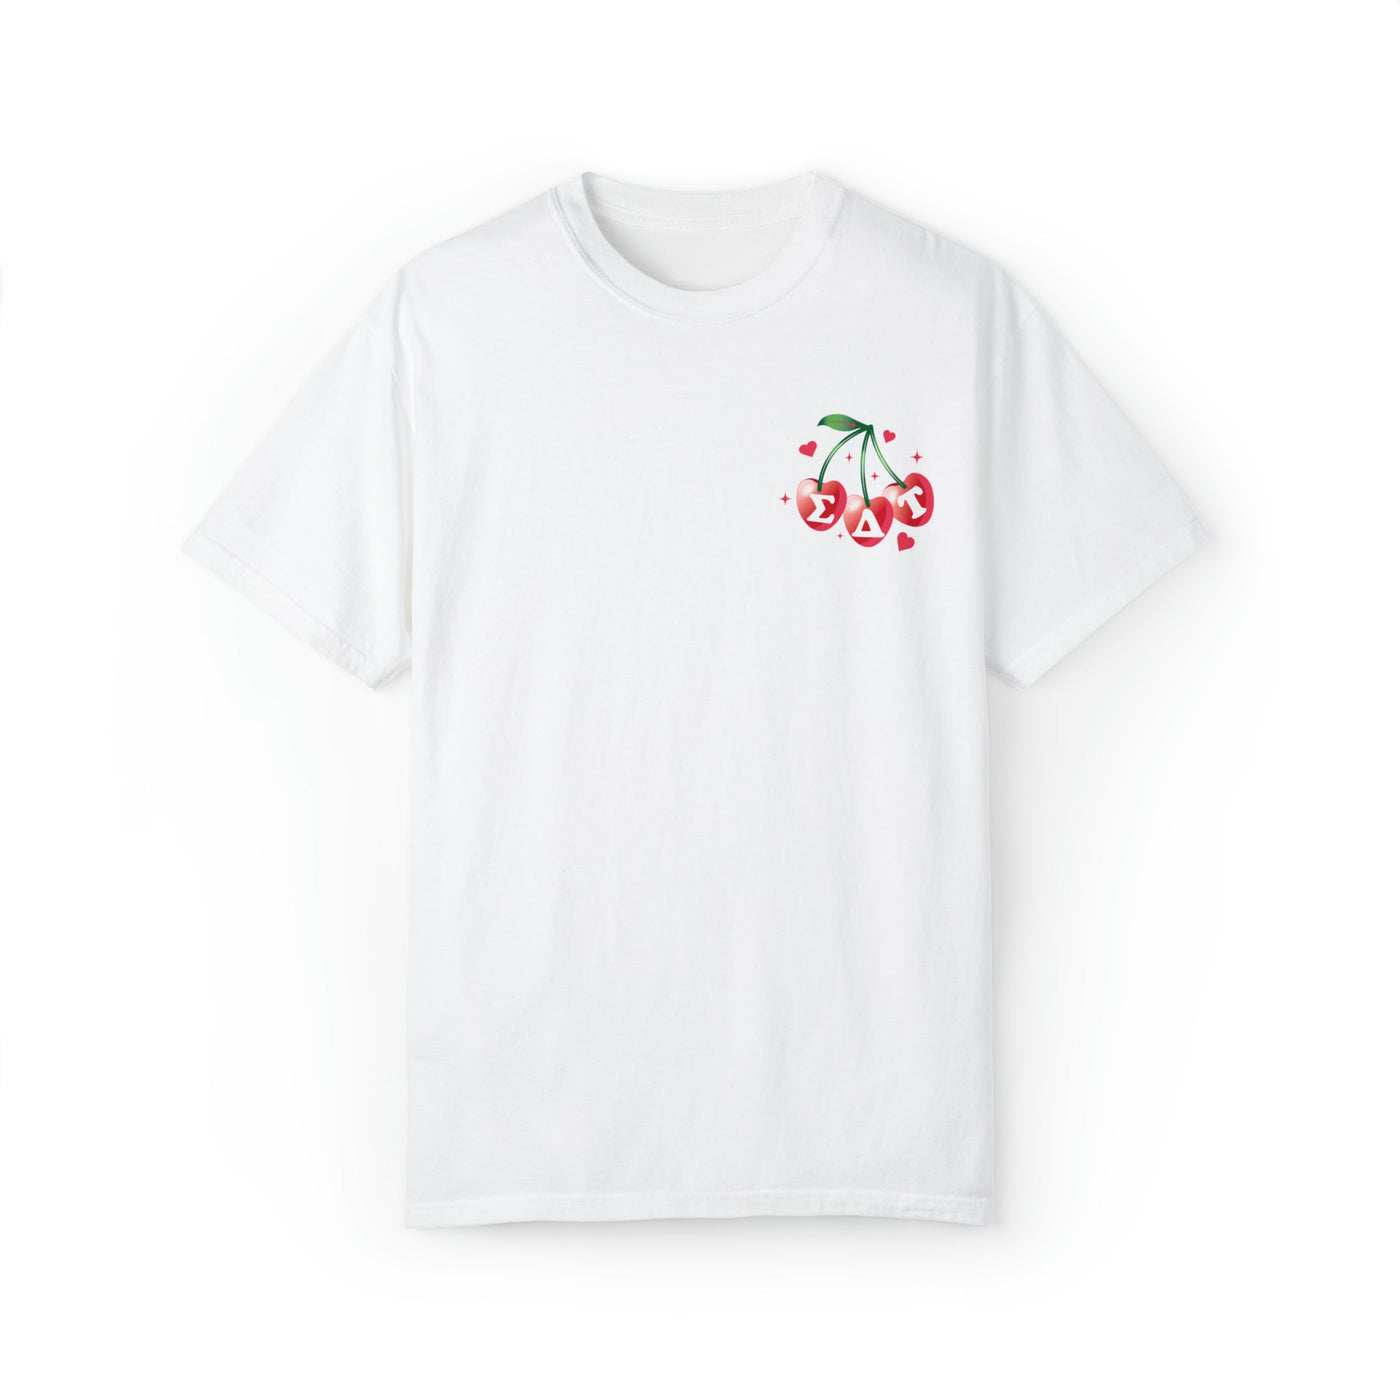 Sigma Delta Tau Cherry Airbrush Sorority T-shirt